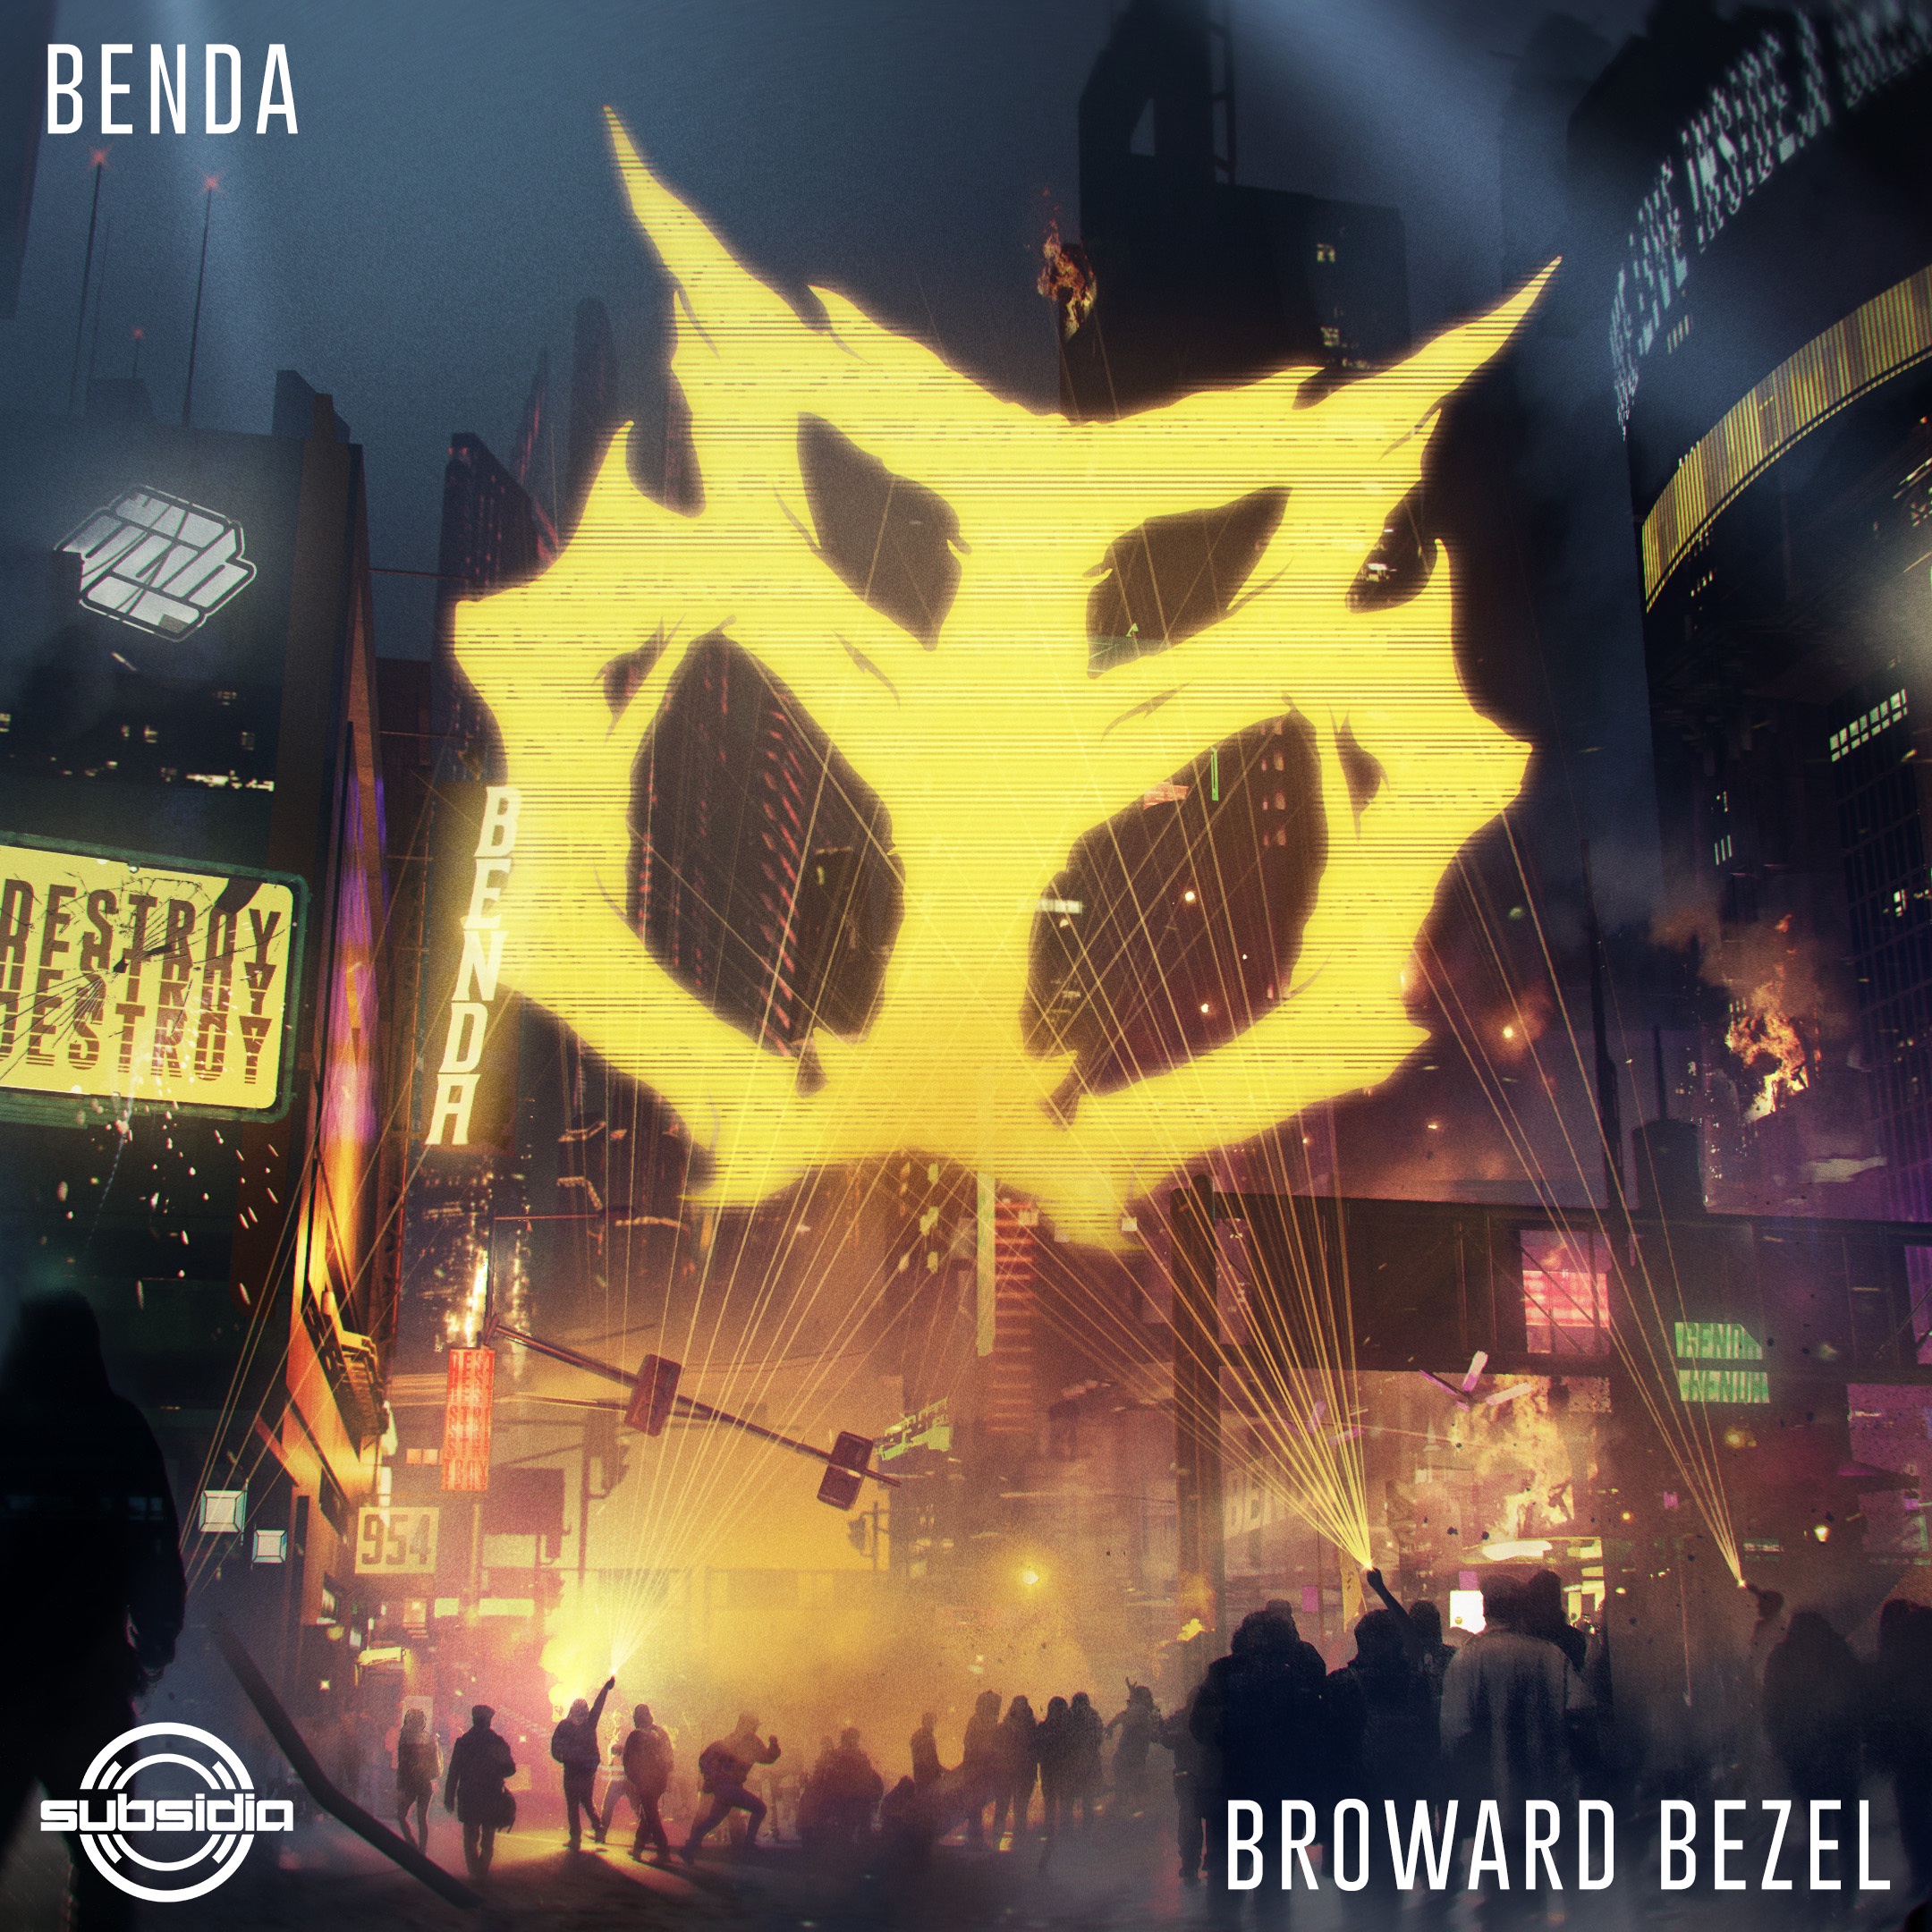 BENDA Drops Sophomore EP On Excision’s Label Subsidia Records ‘Broward Bezel’